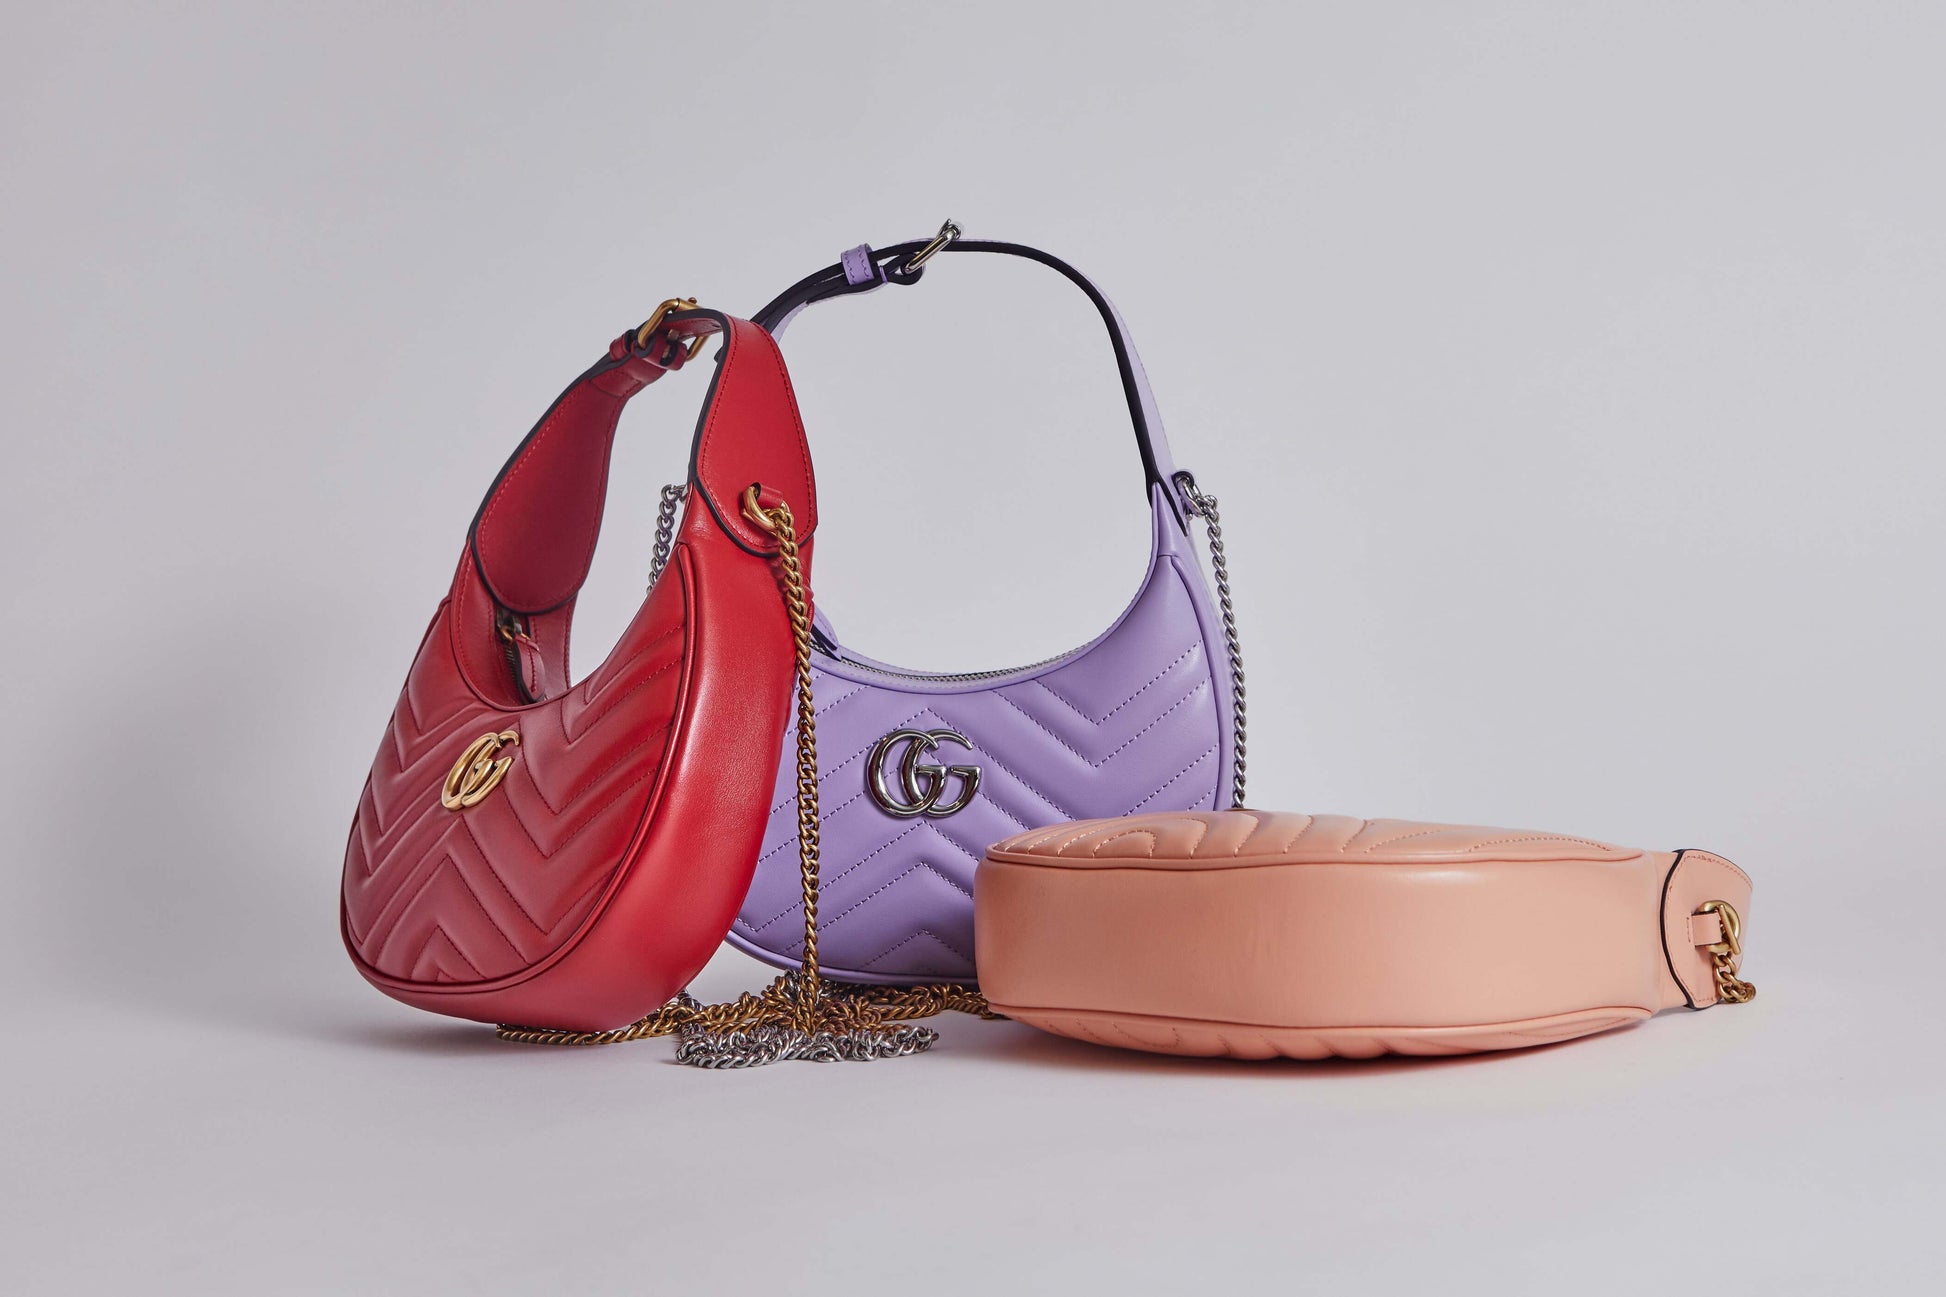 Gucci Marmont Half-Moon shaped bag - Peach – Hire our handbag